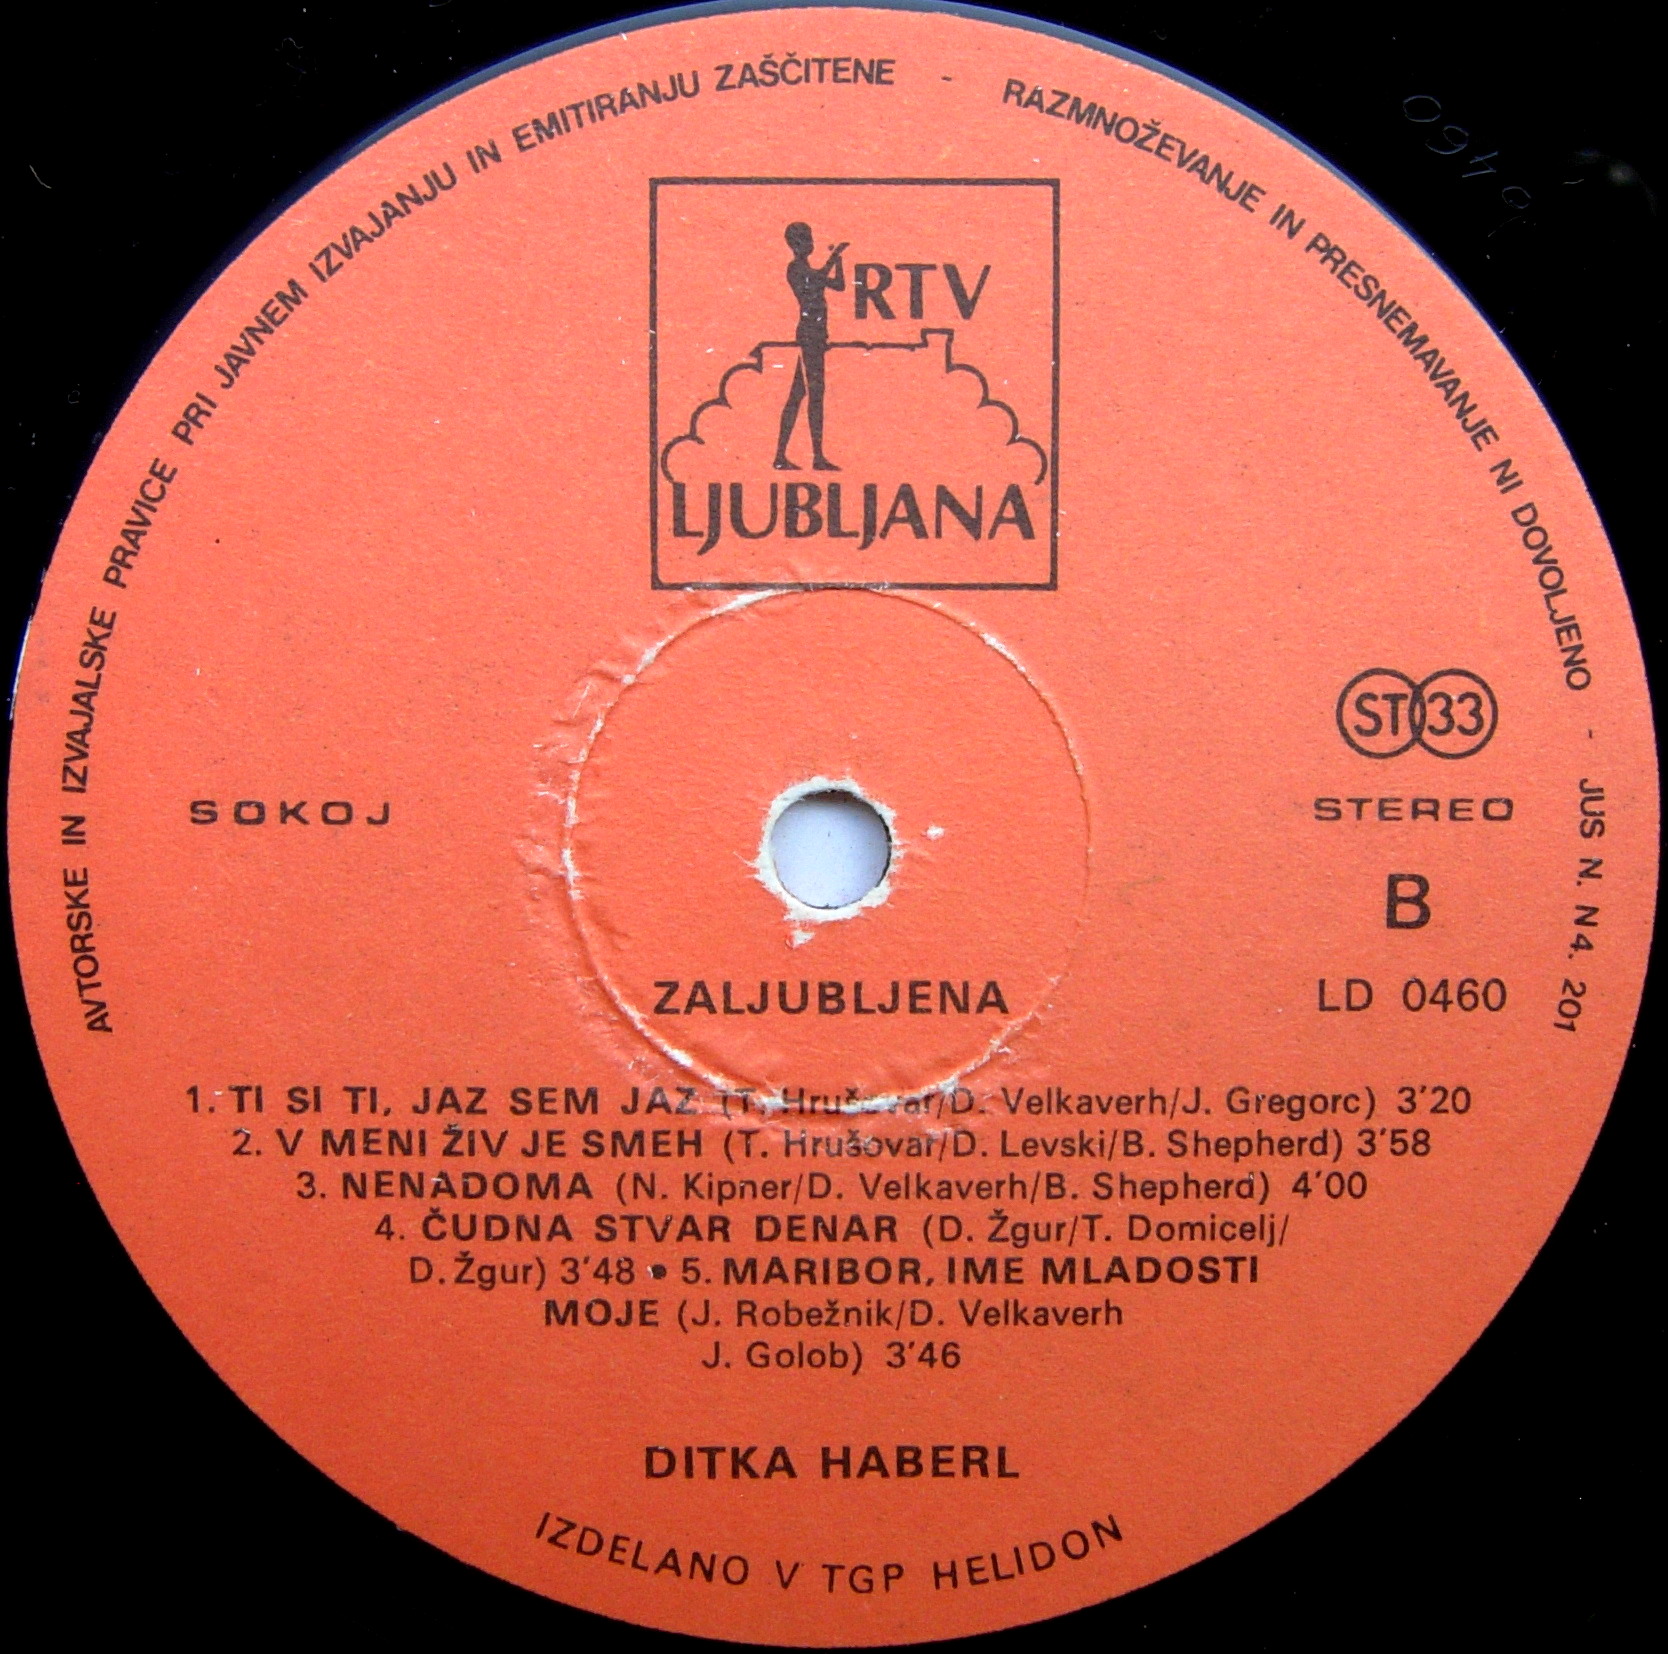 Ditka Haberl Zaljubljena 1979 LP B